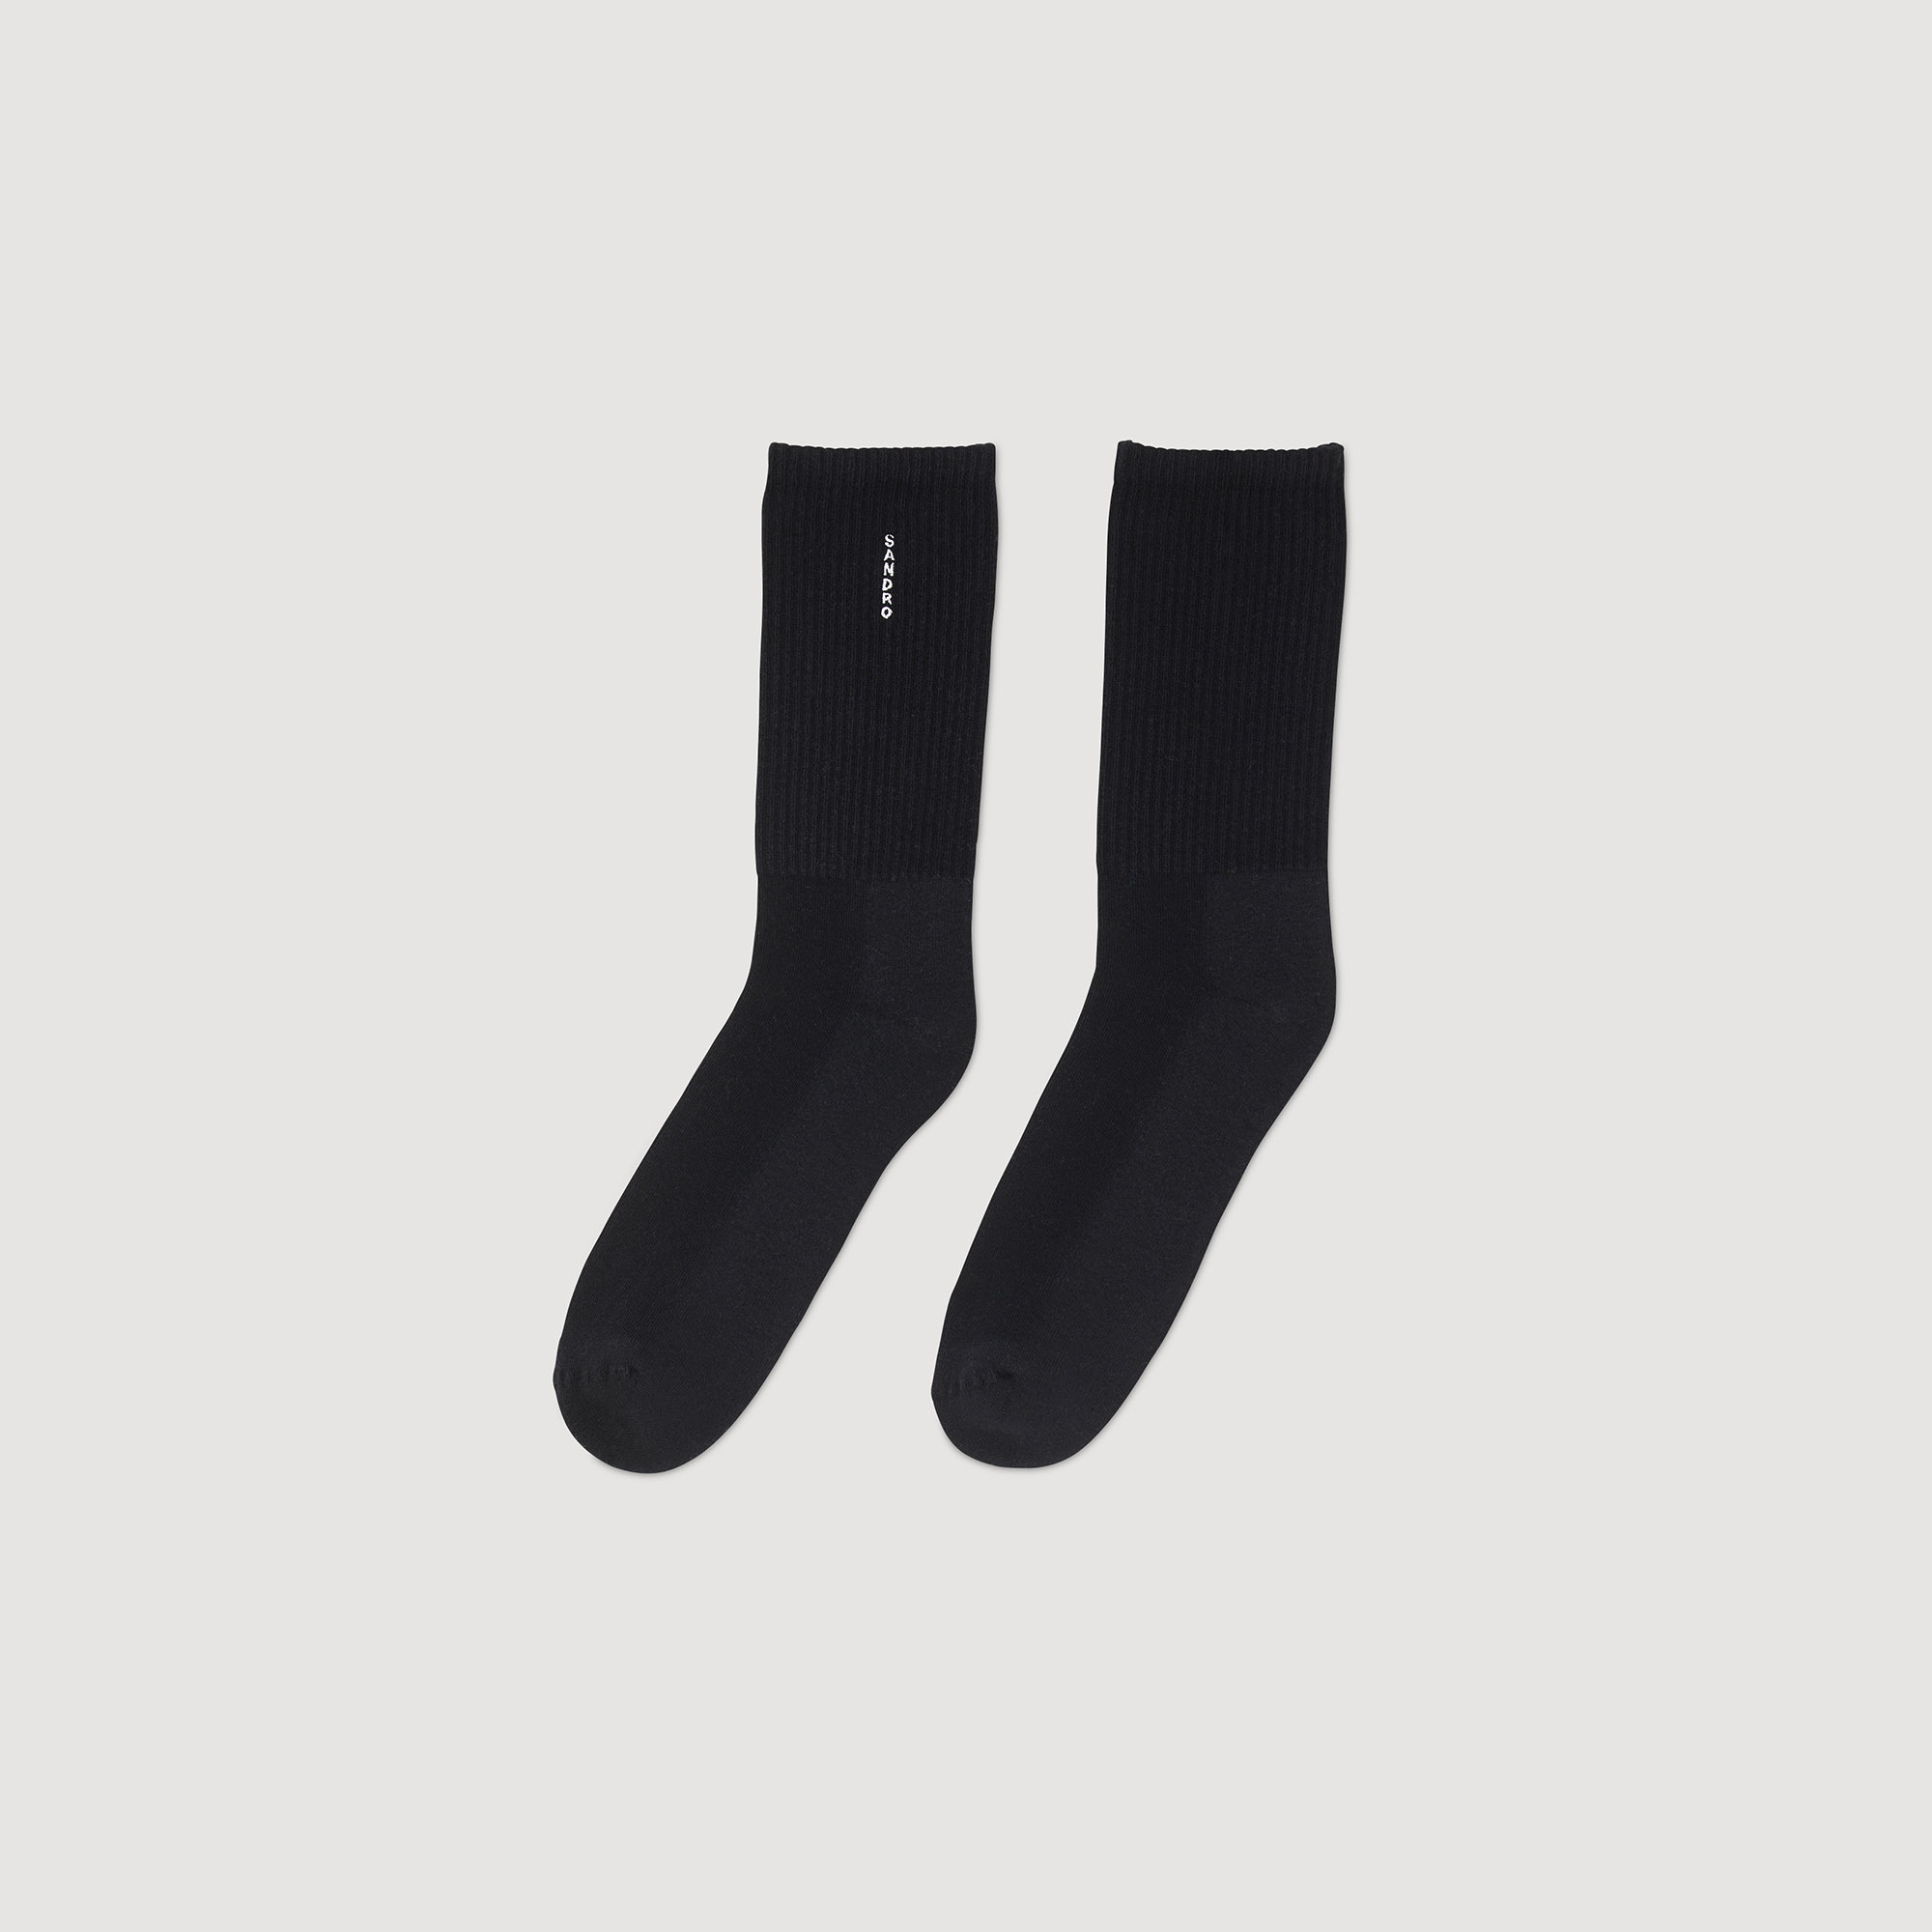 Sandro cotton Cotton socks